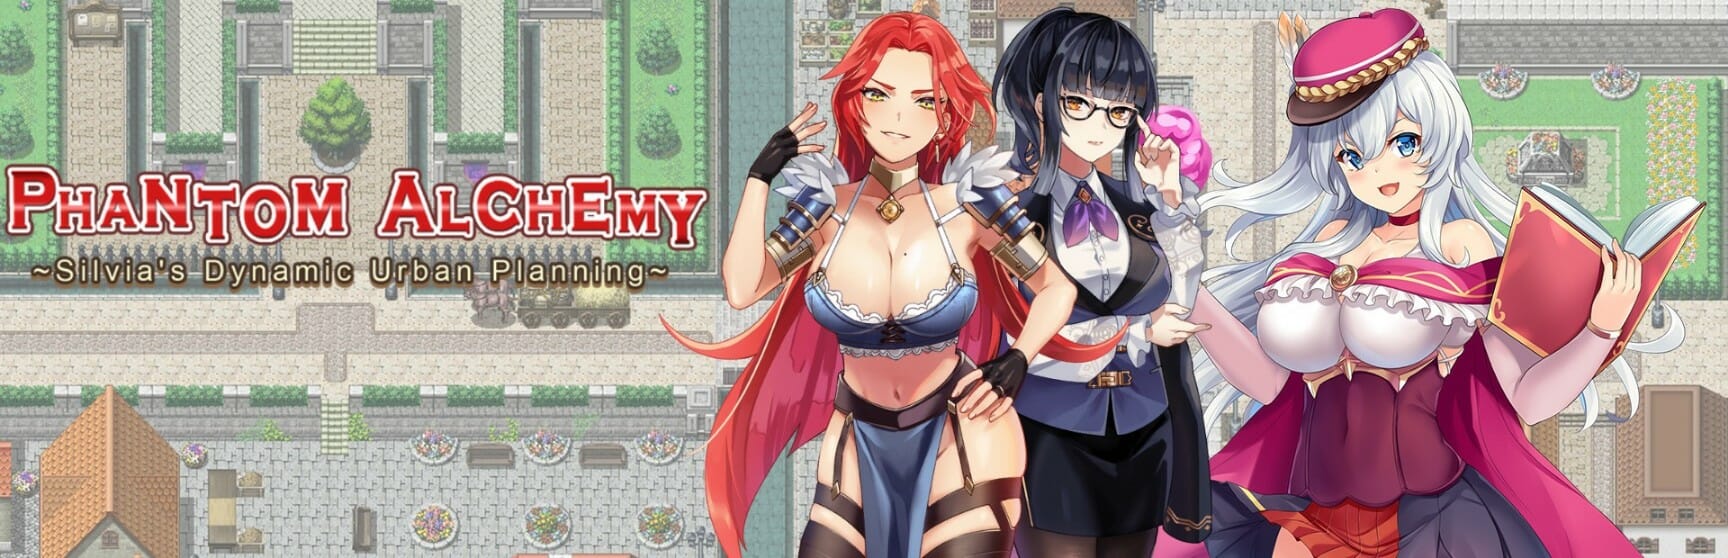 Phantom Alchemy Apk Adult Hentai Game Download (10)